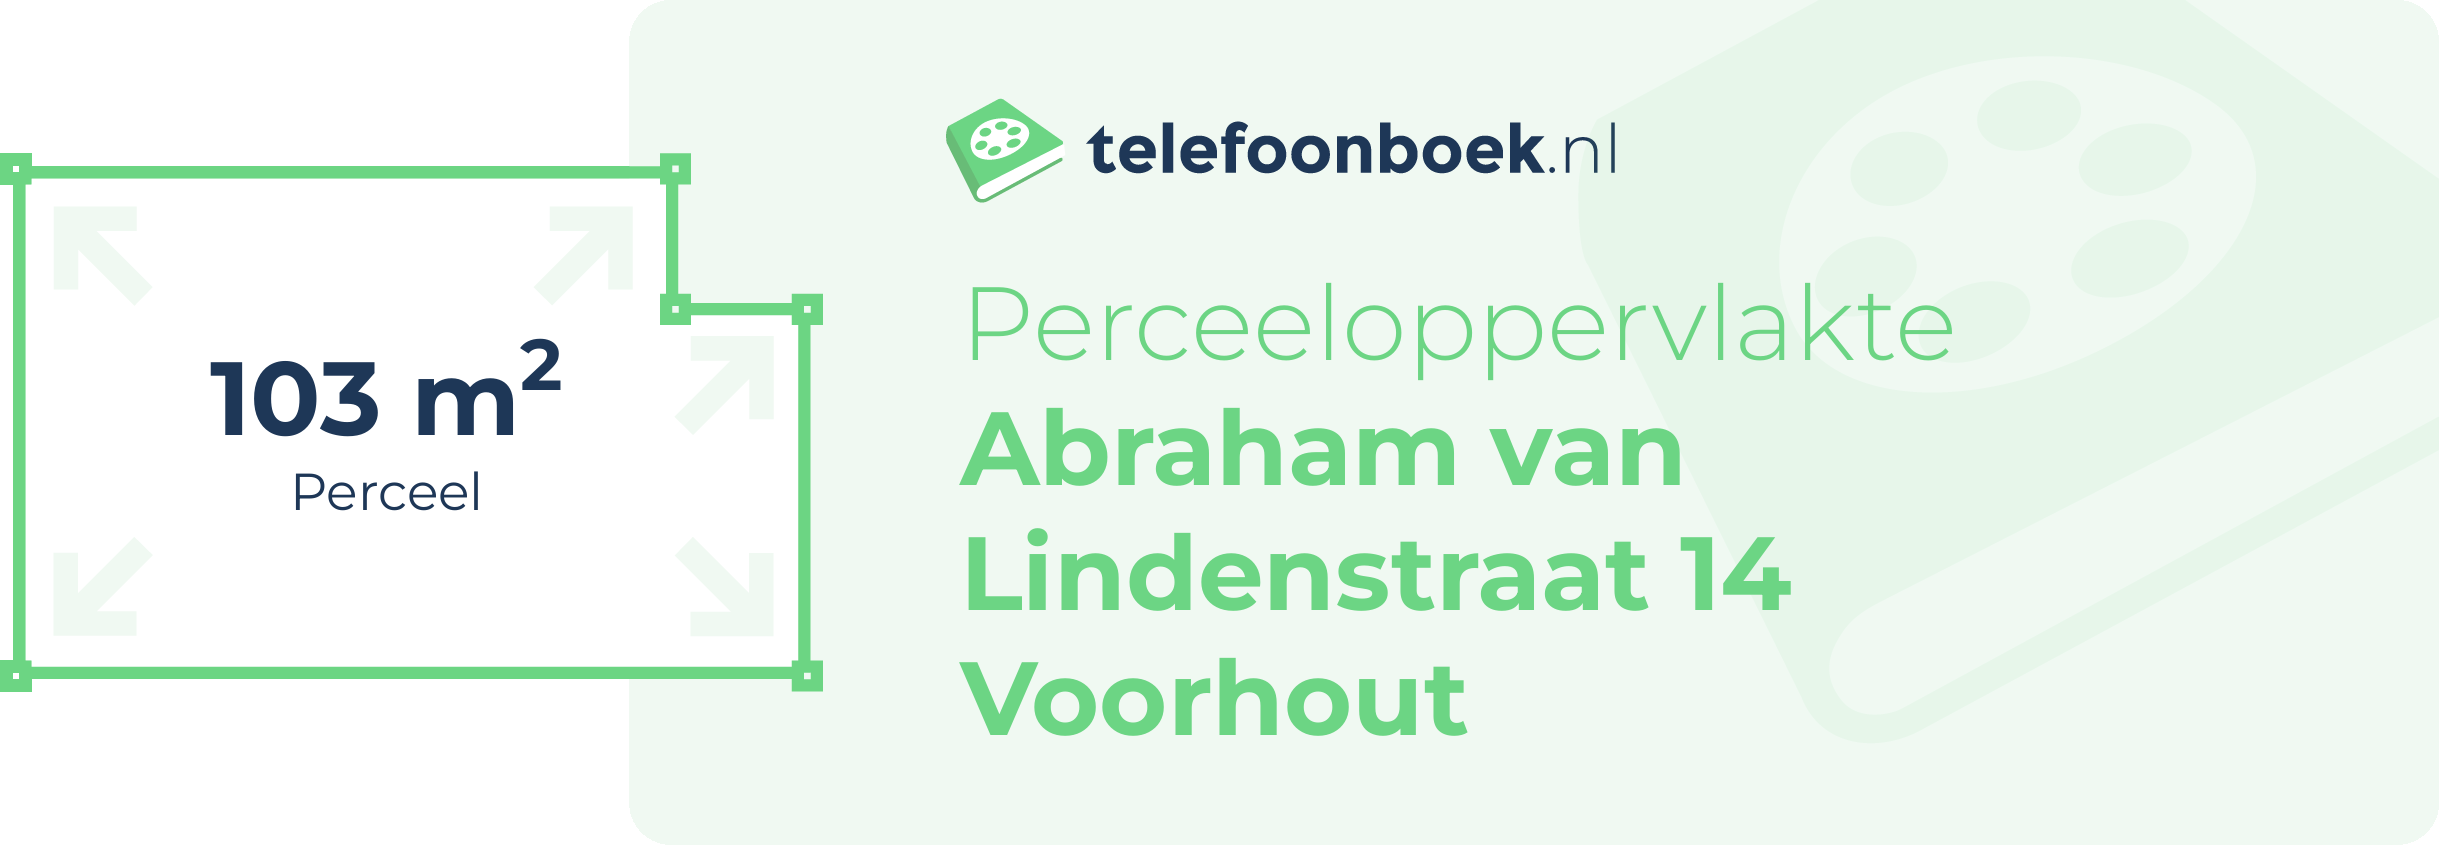 Perceeloppervlakte Abraham Van Lindenstraat 14 Voorhout